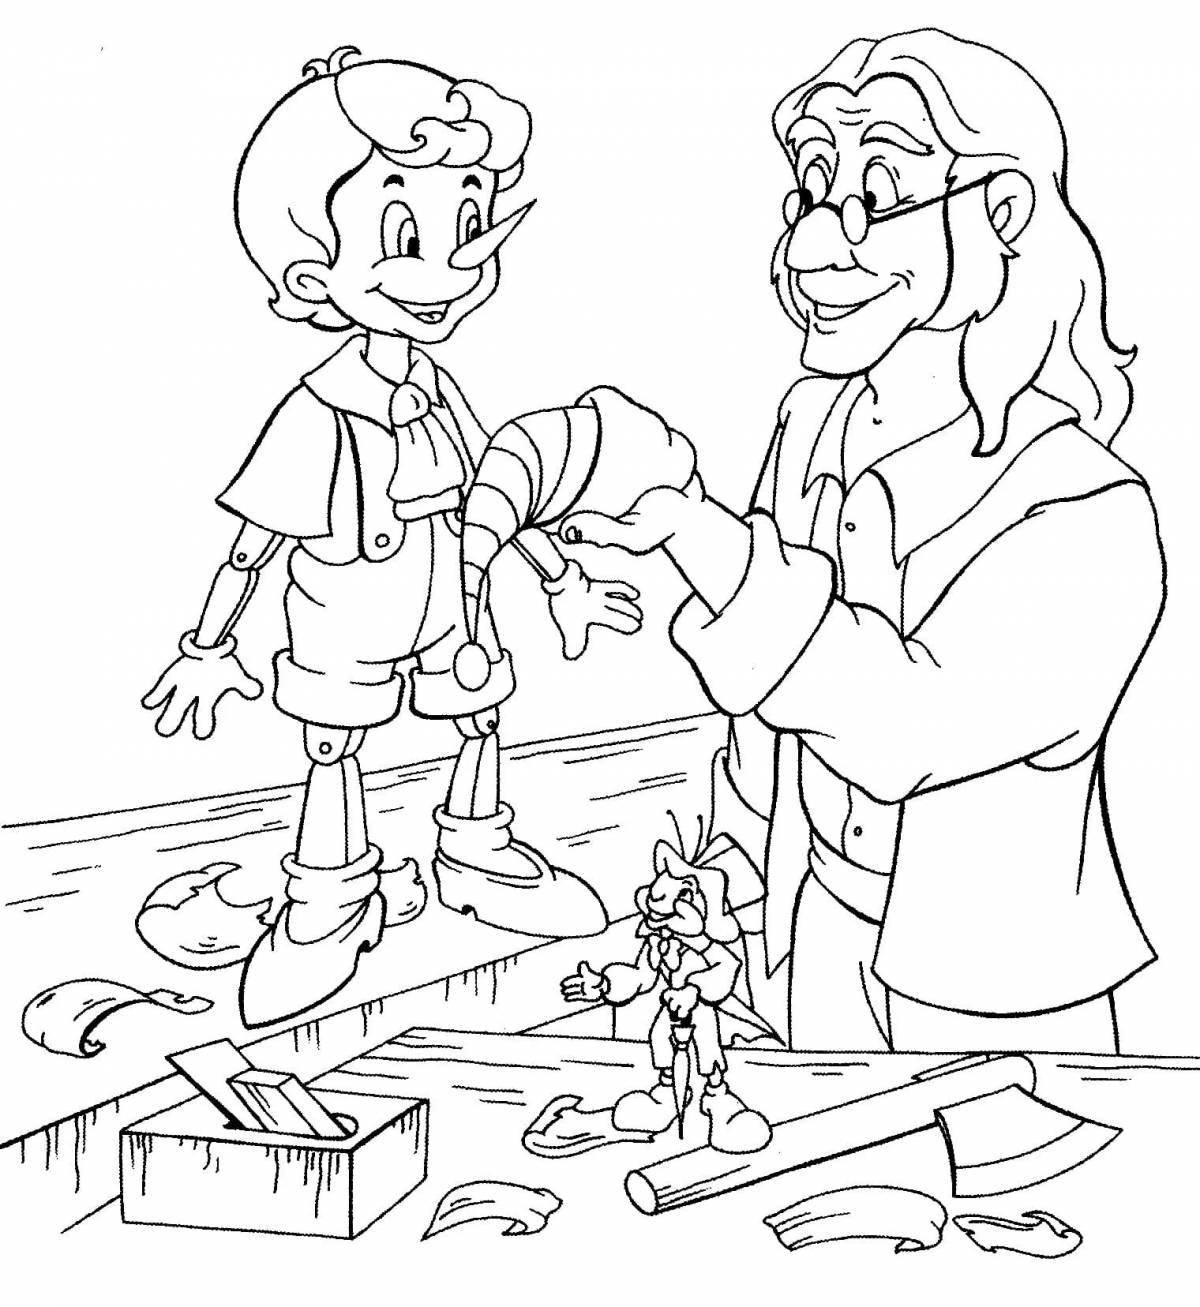 The adventures of Pinocchio #2